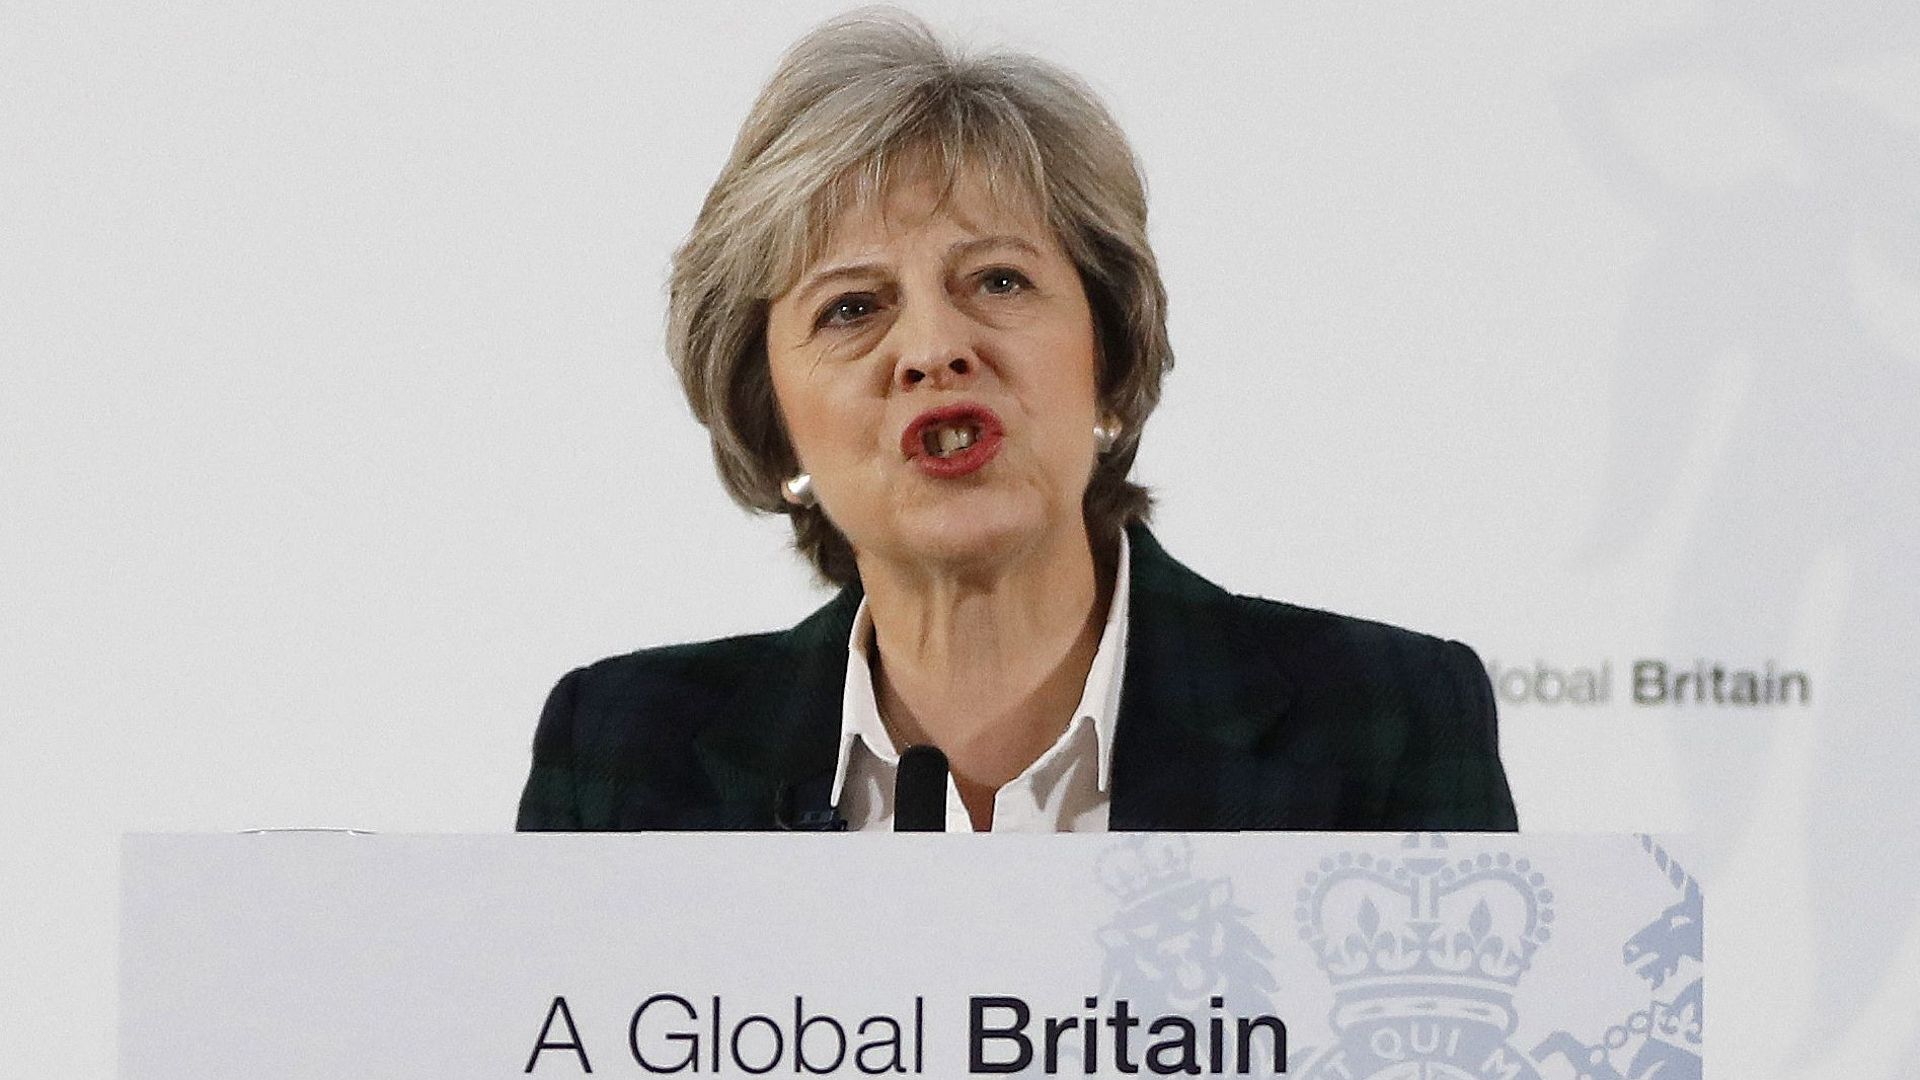 Theresa May promet "A Global Britain" en janvier 2017.